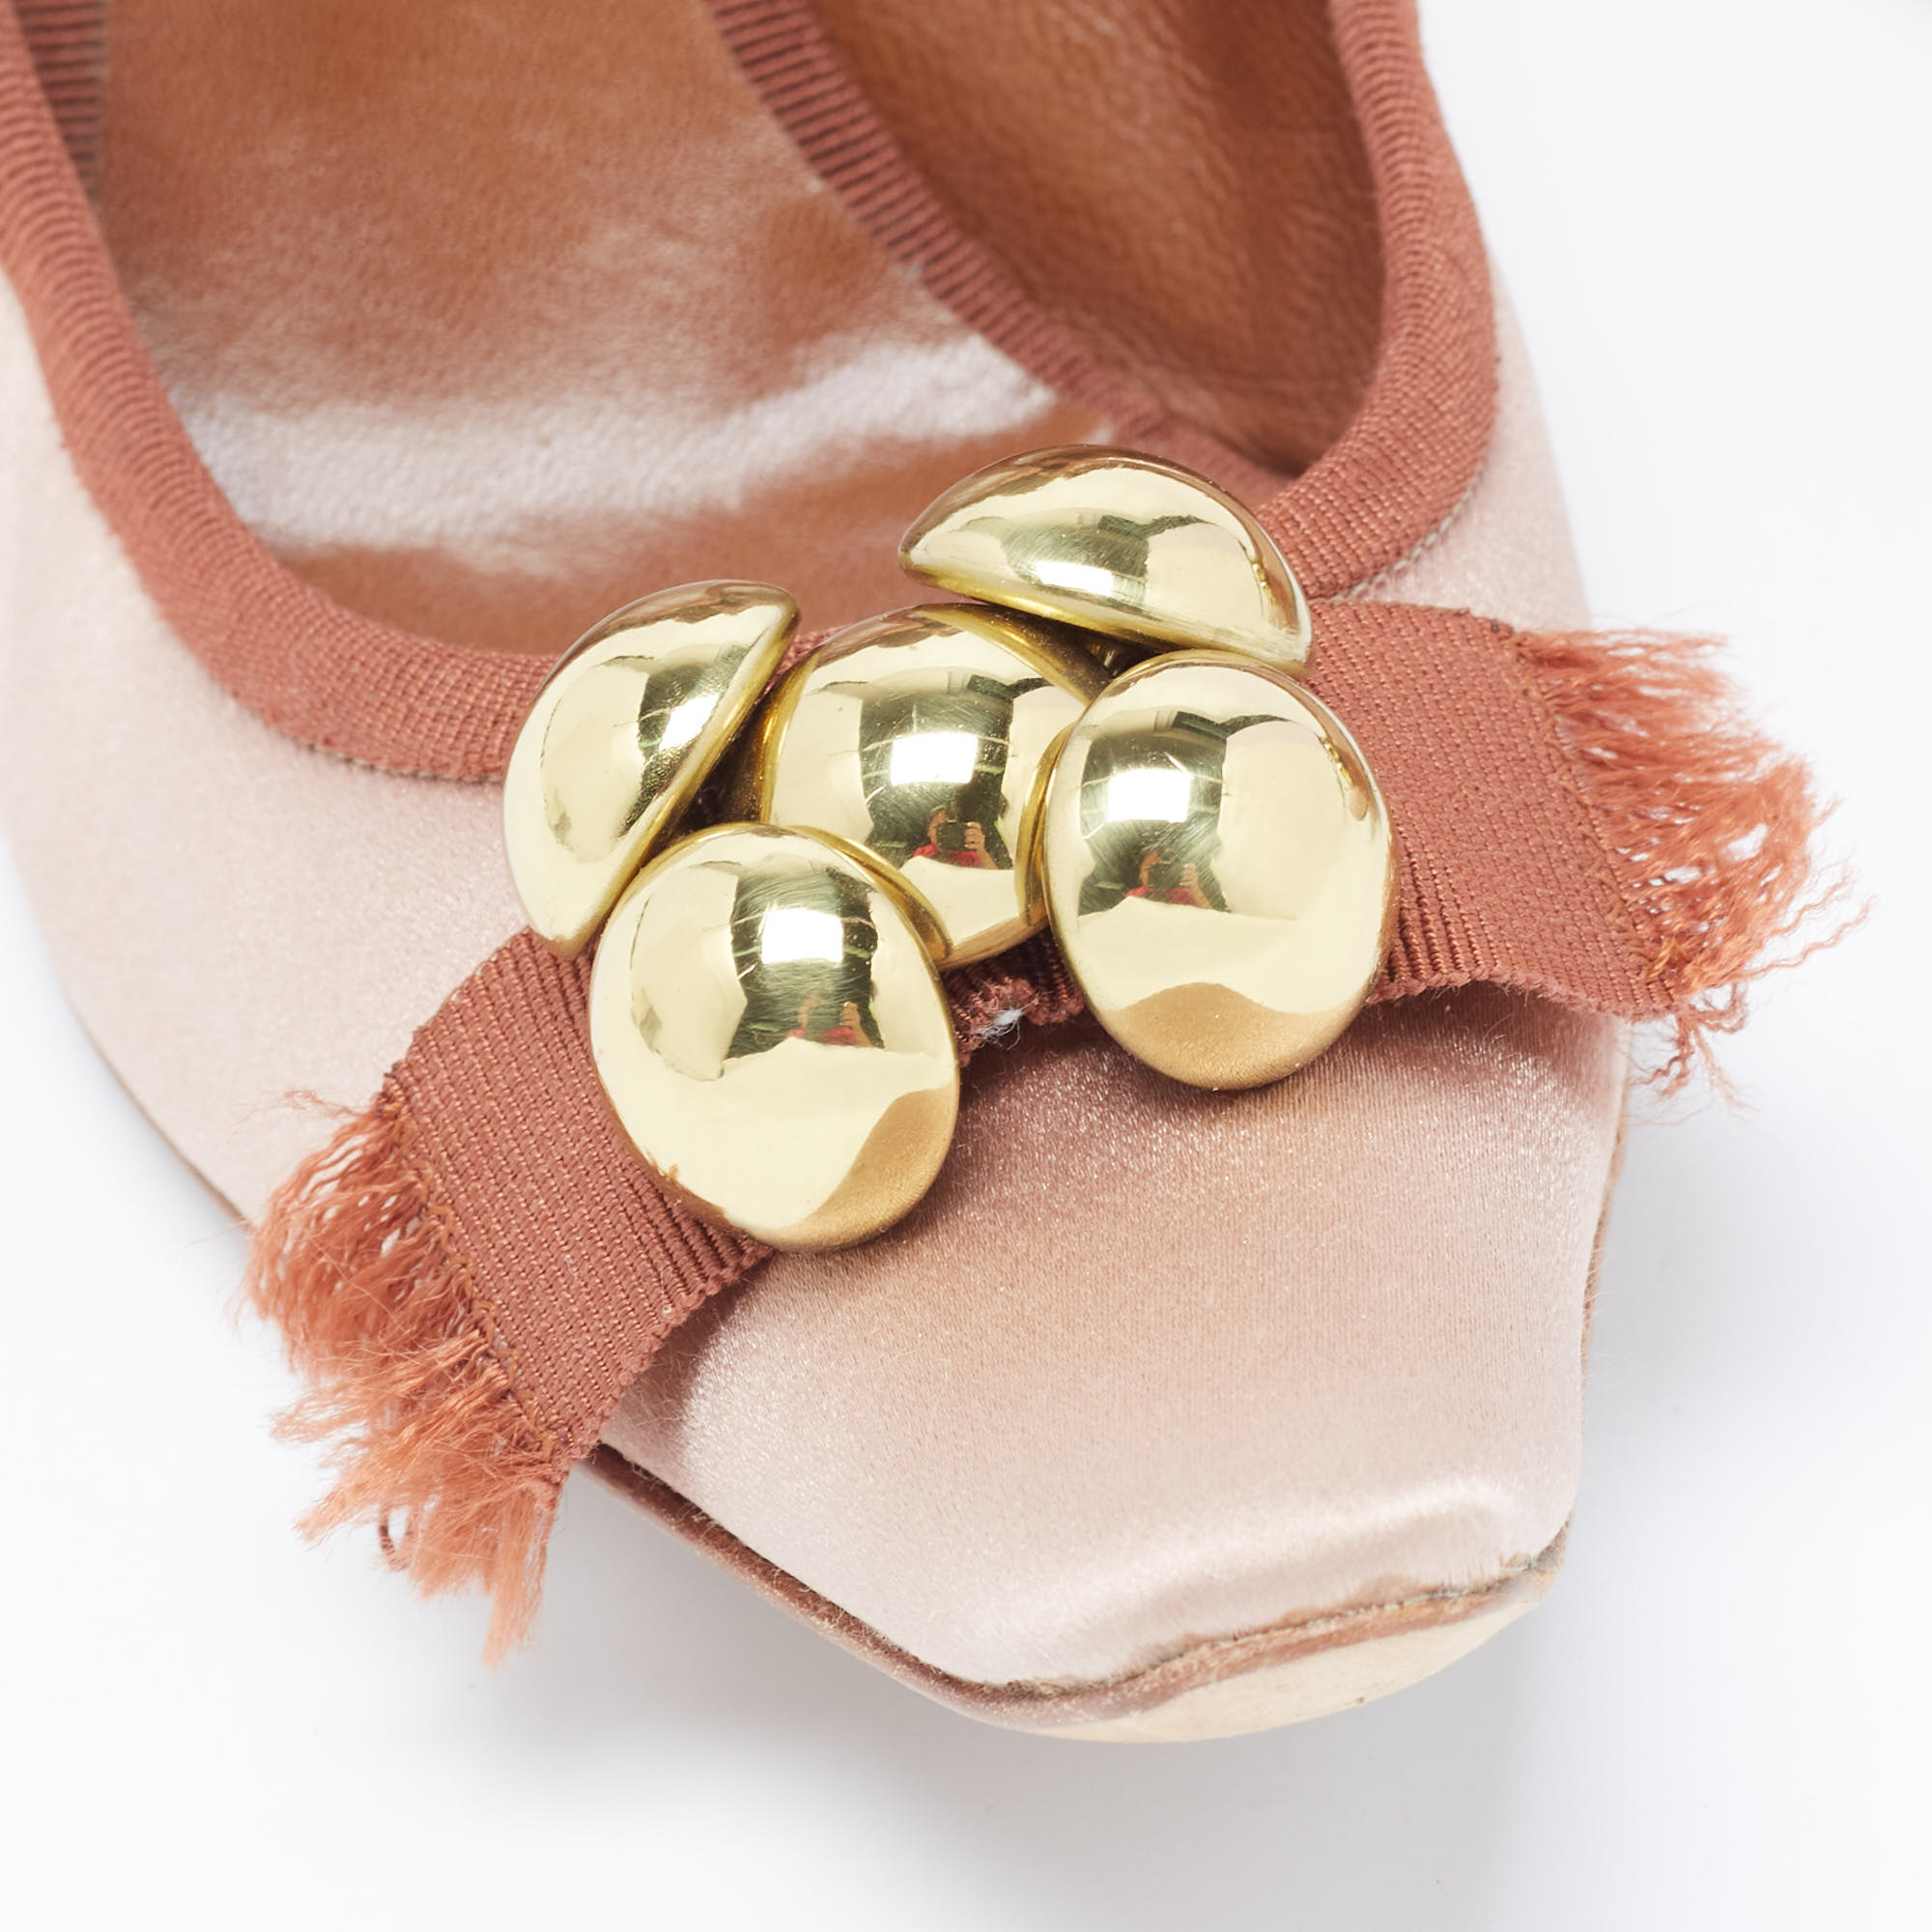 Chloe Pink Satin Embellished Pointed Toe Pumps Size 39